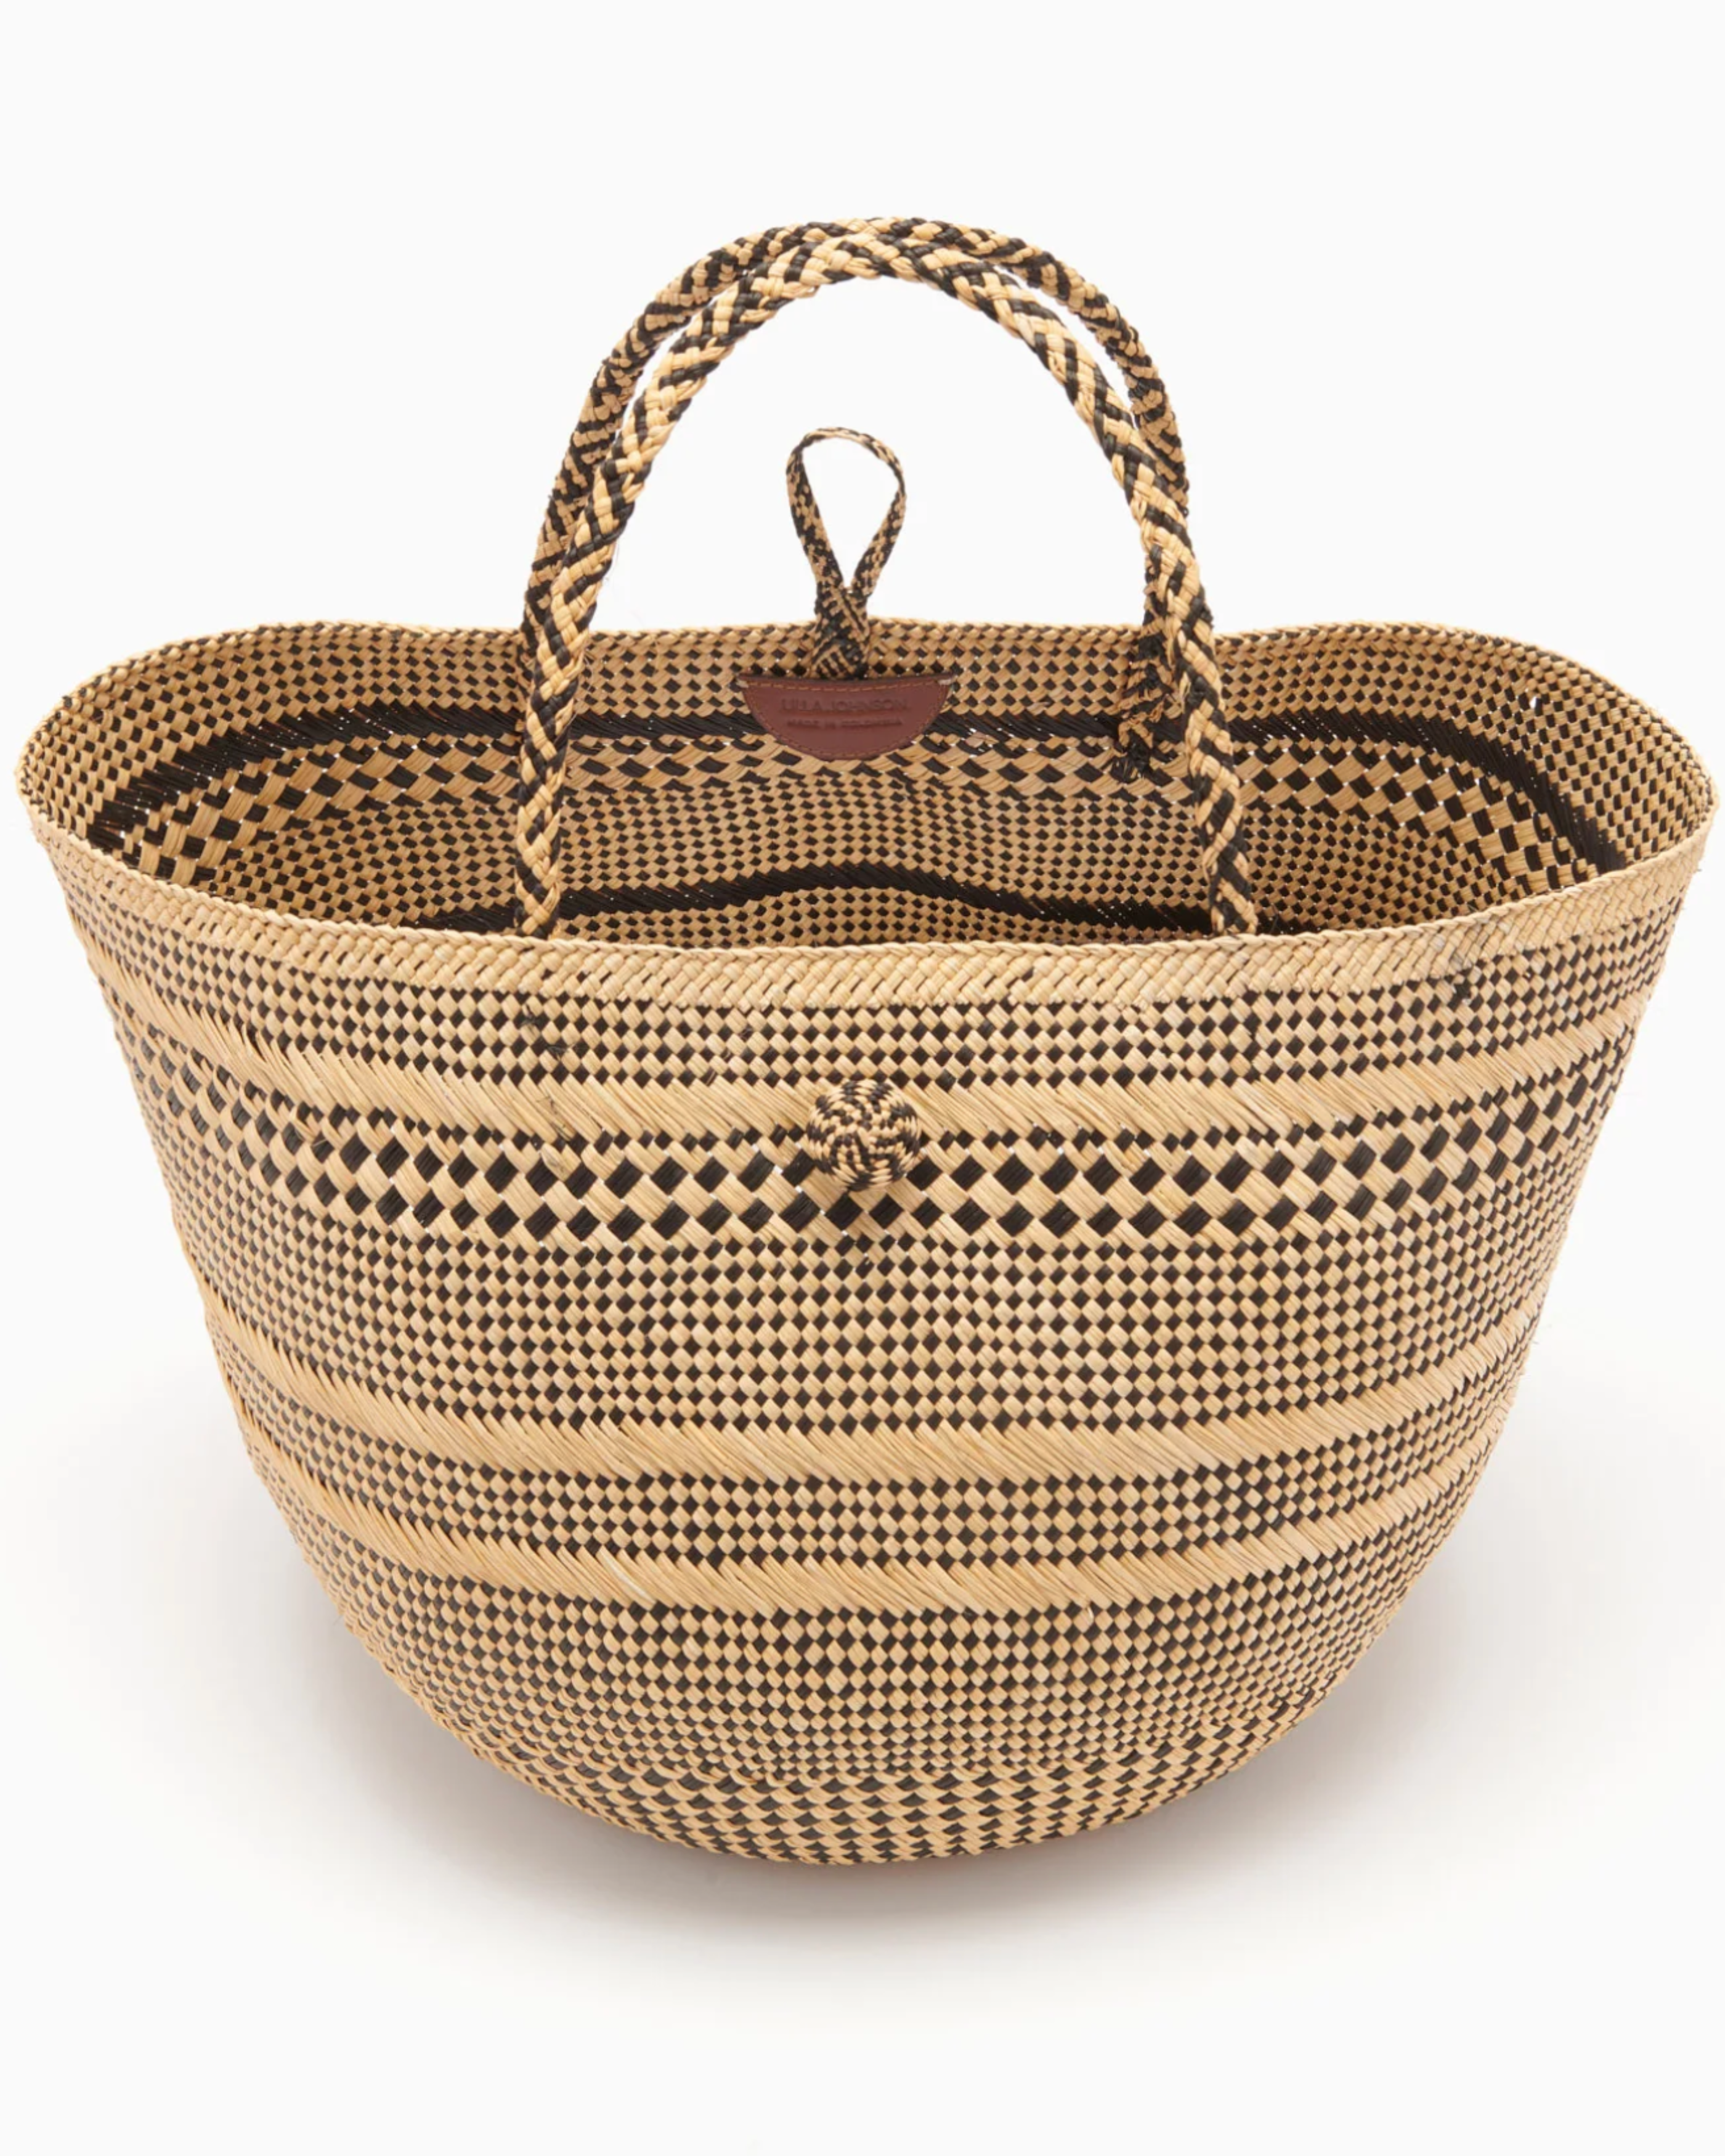 Ulla Johnson Marta Large Basket Tote Bag in Chocolate Stripe